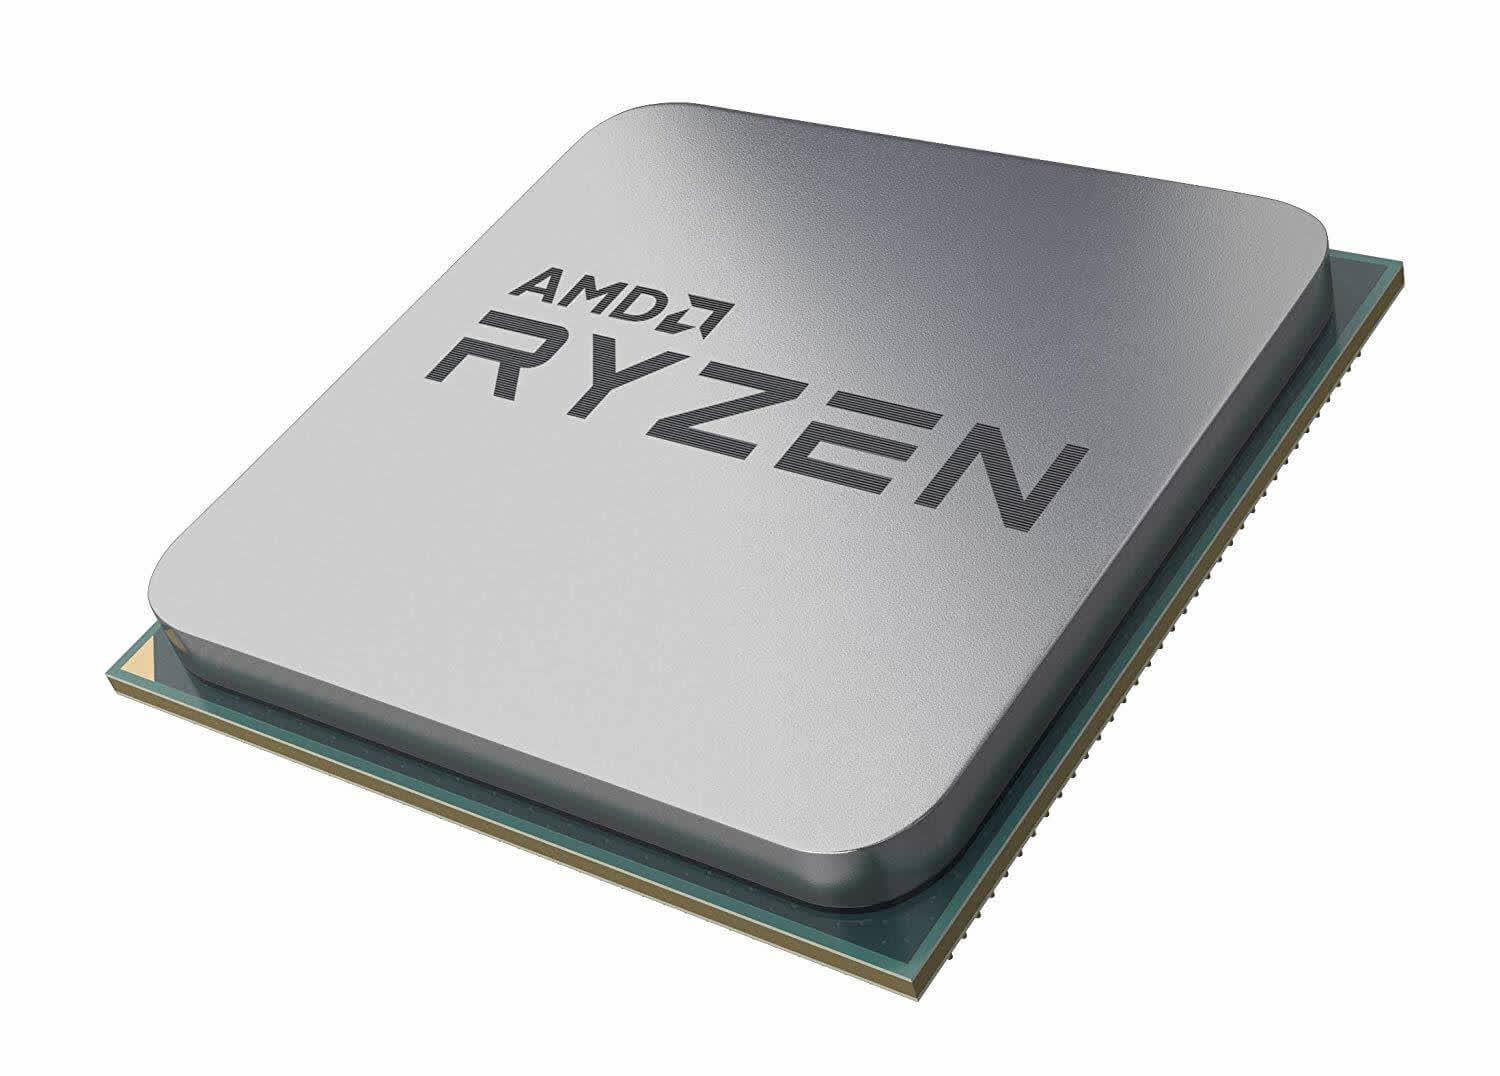 AMD Ryzen 5 3600X